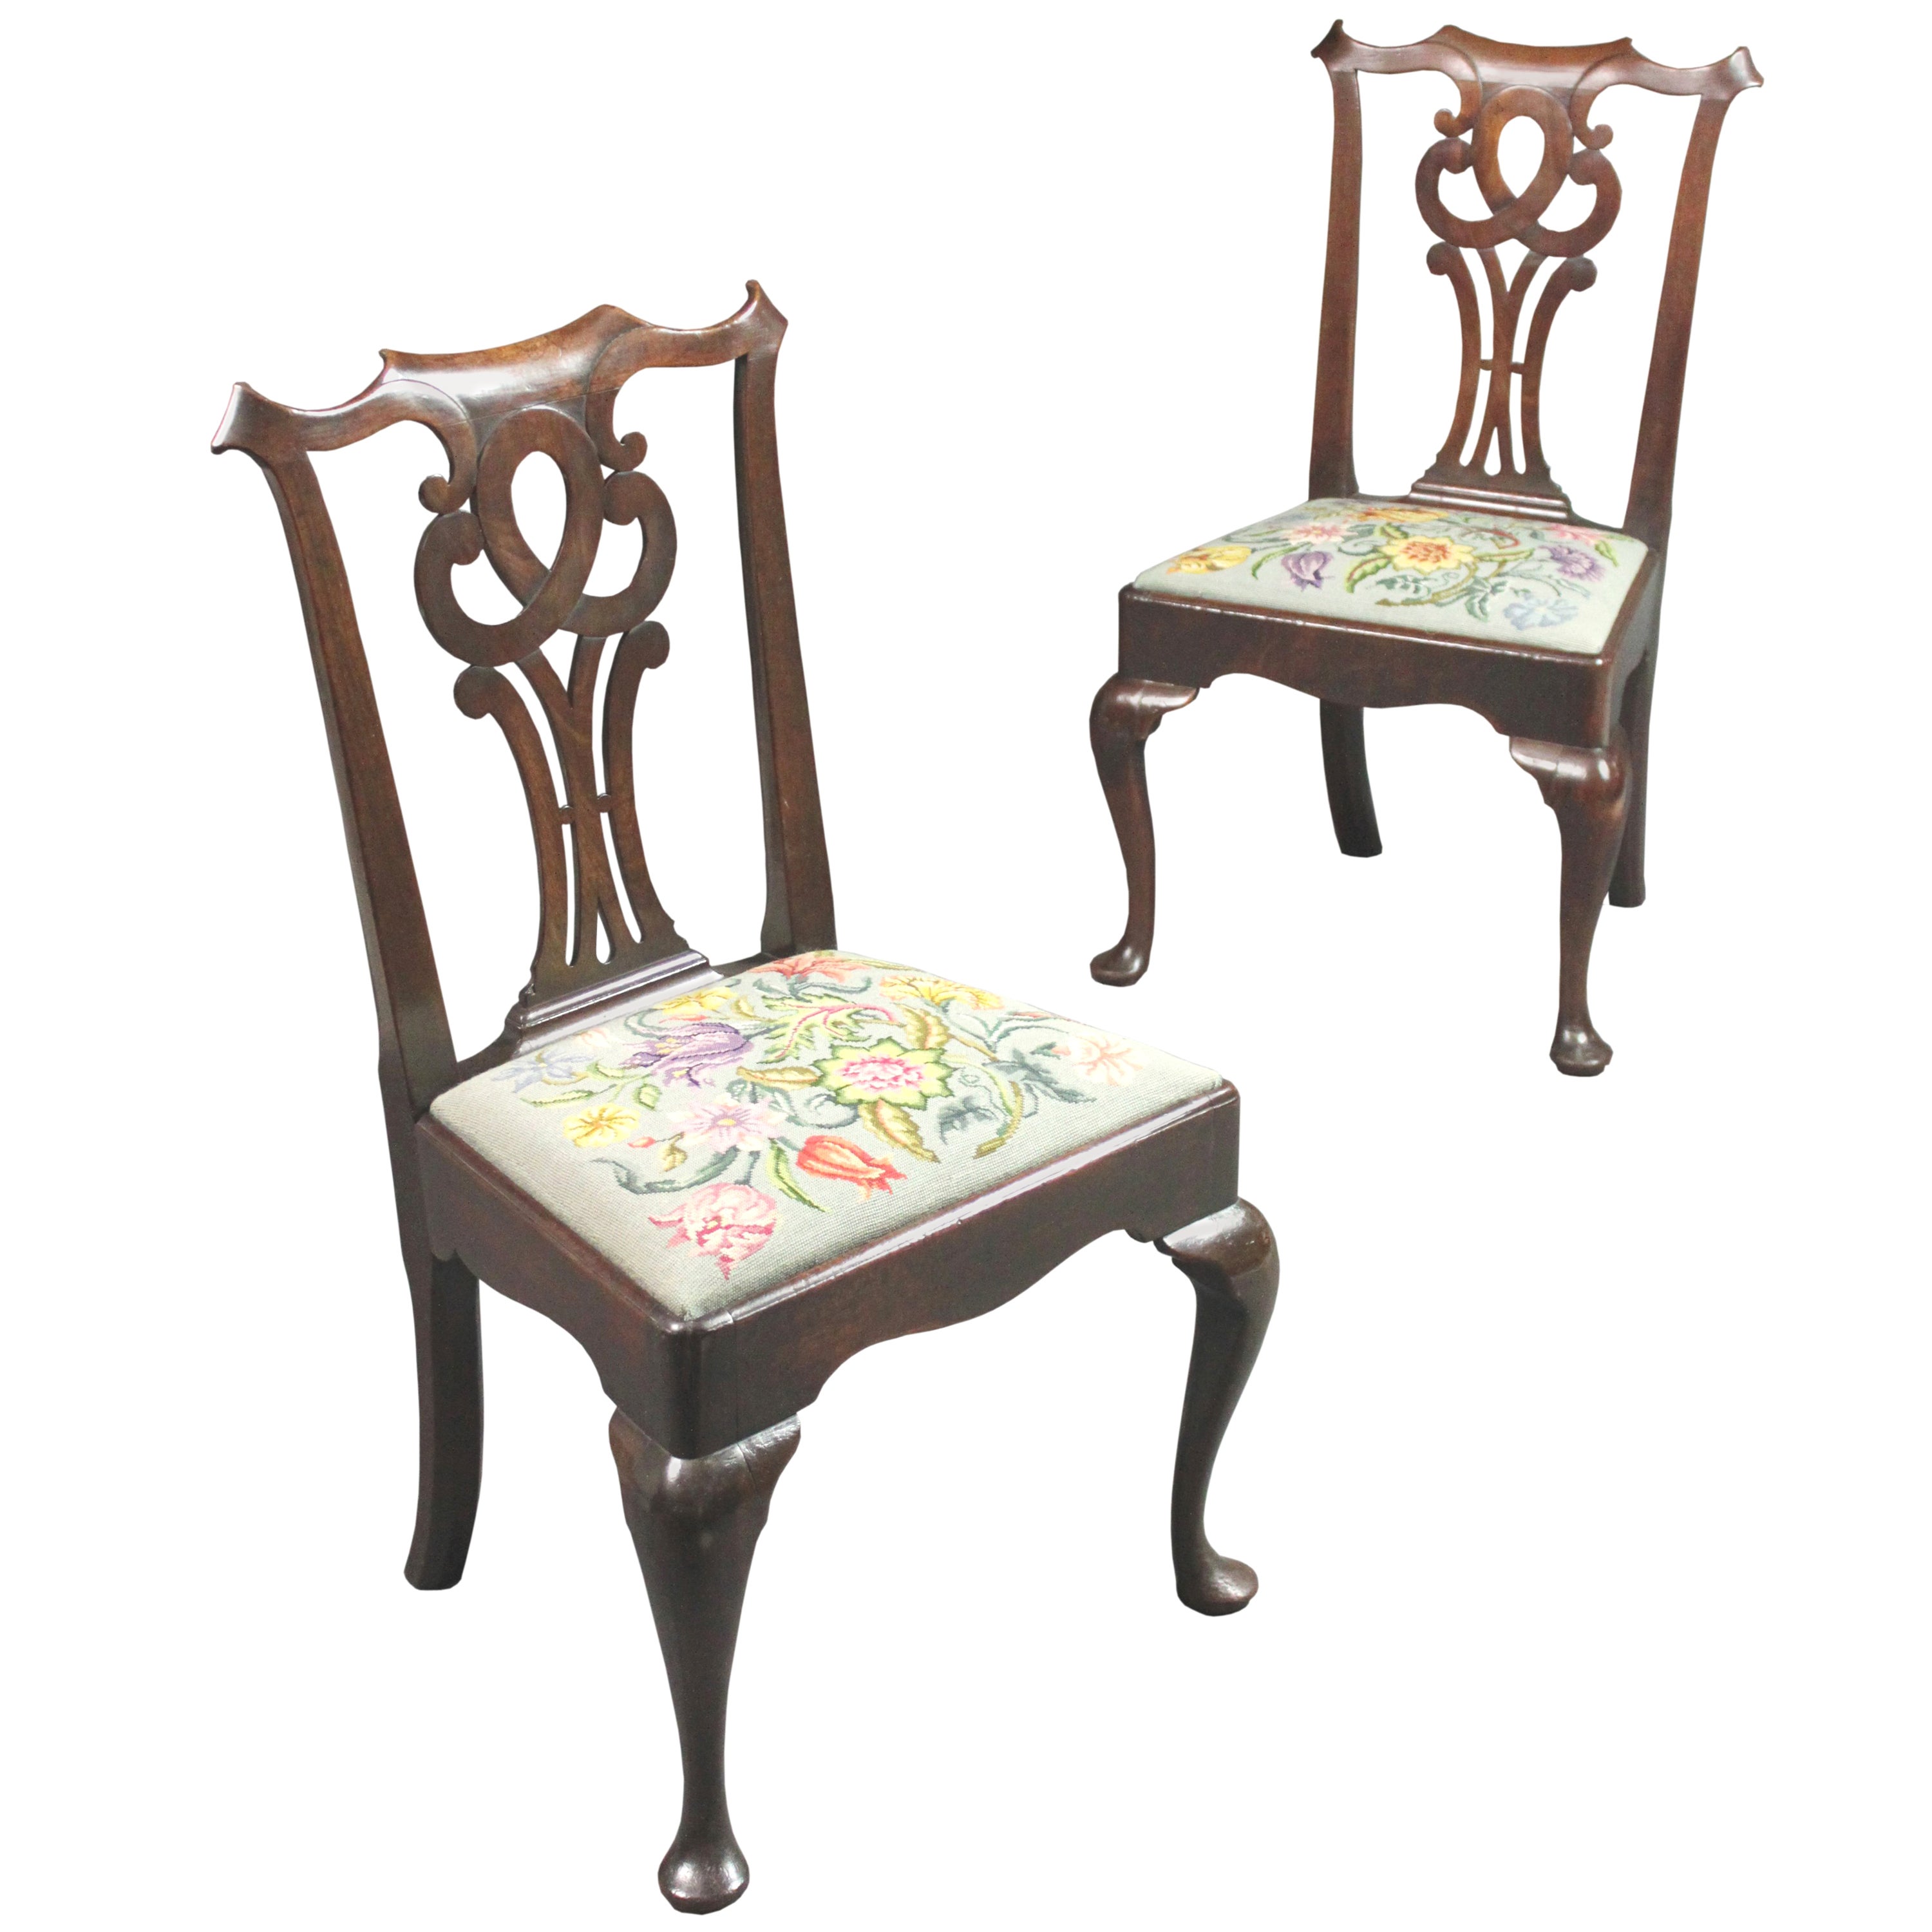 English George II Period Leather Lounging Chair, Backstool, Walnut